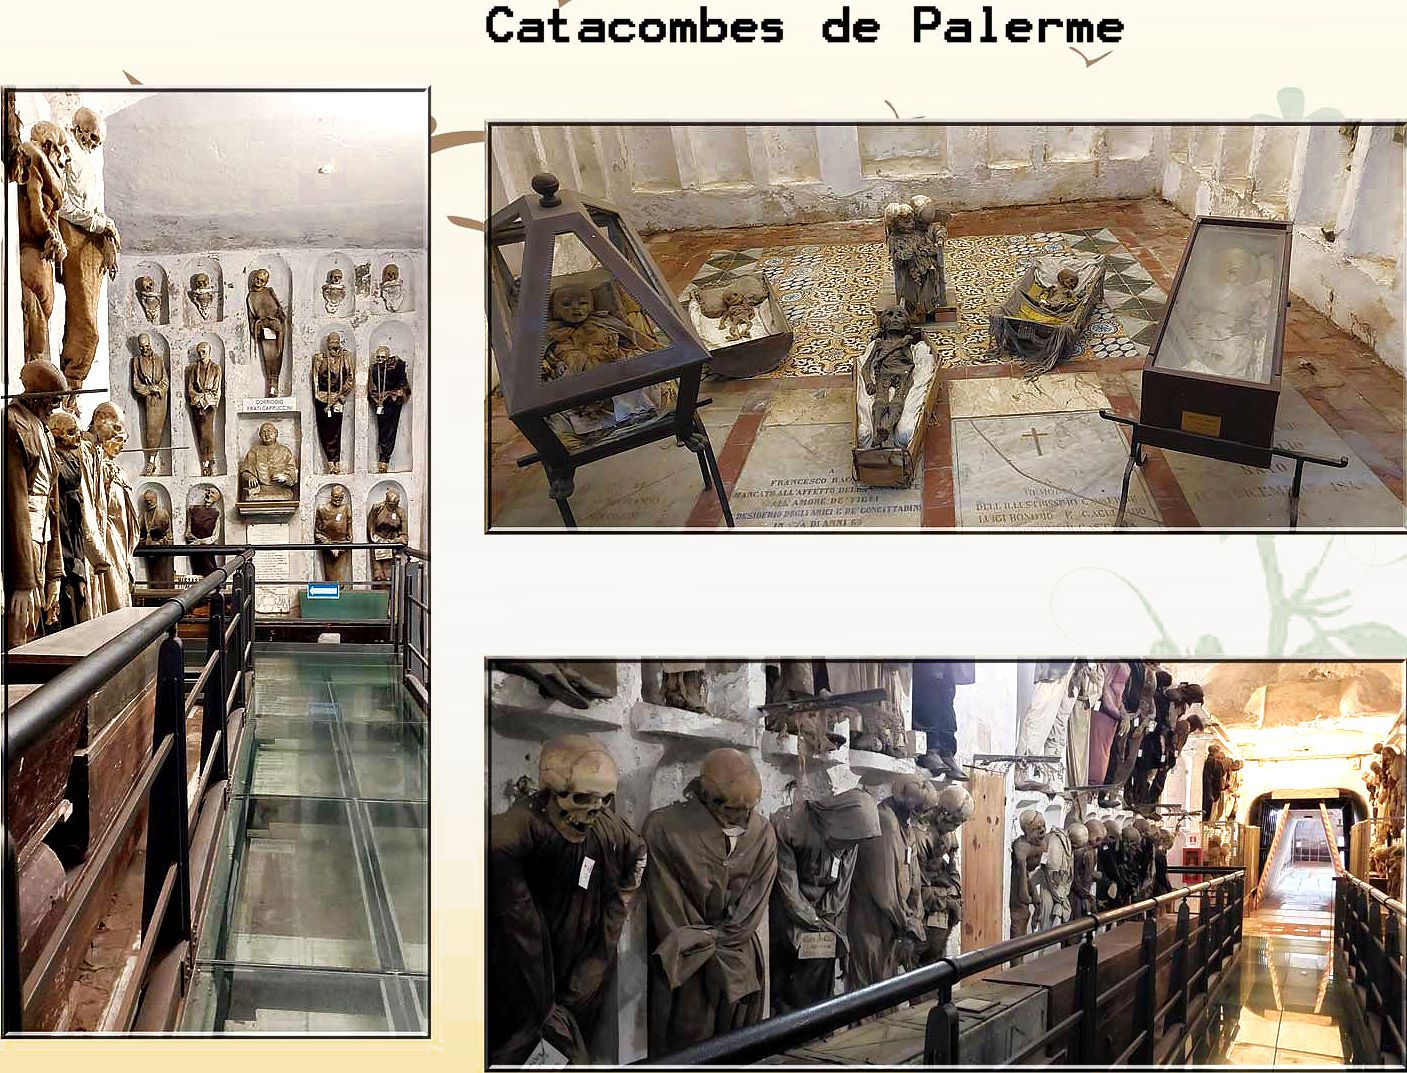 "affinites france italie" catacombes de palerme